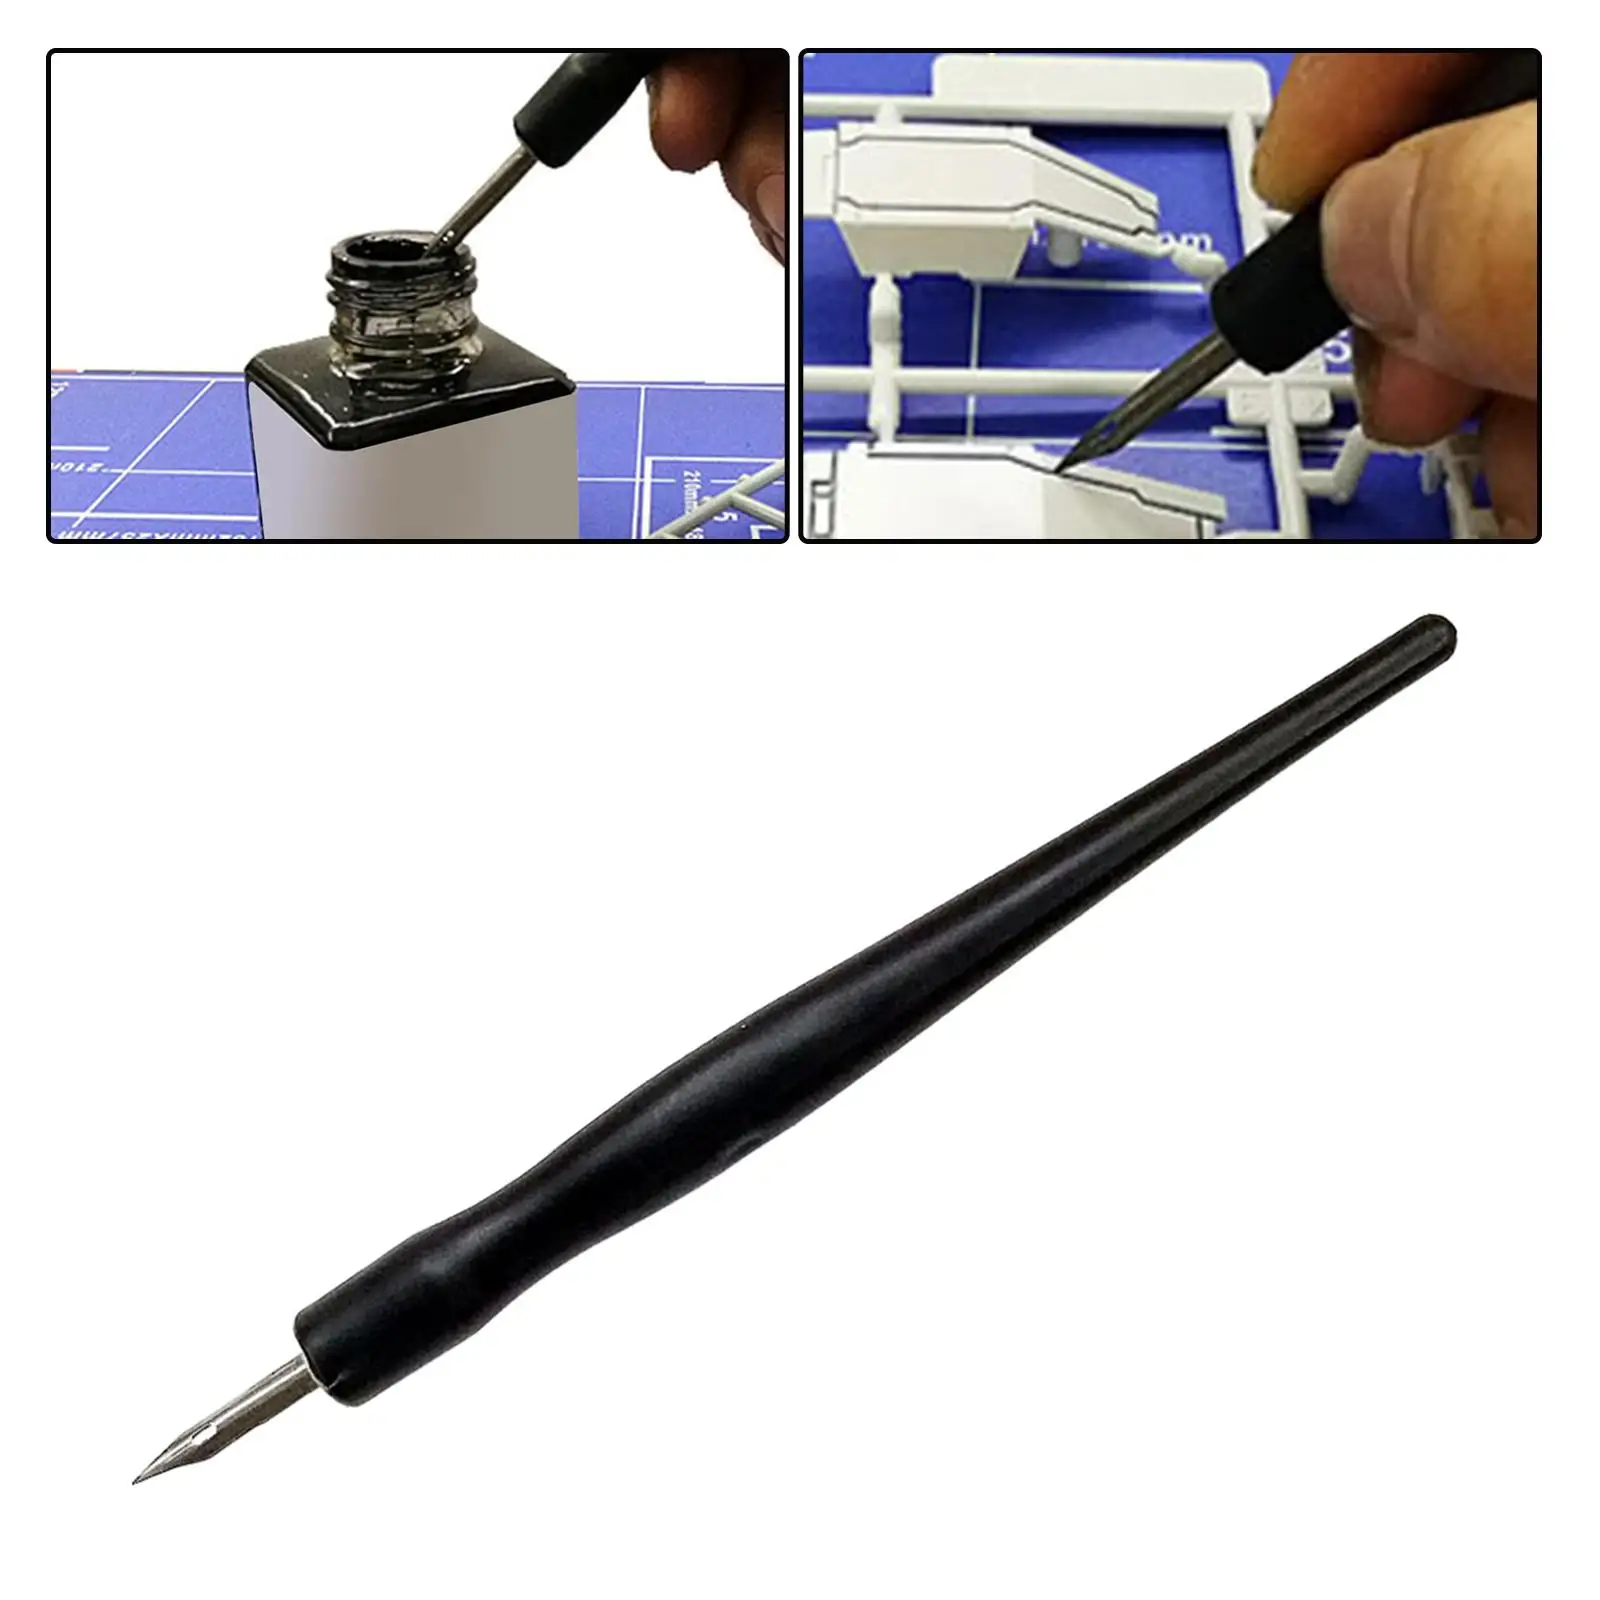 Panel Line Accent Pen Permeation Pen Leaking Pen Infiltration Line Tool